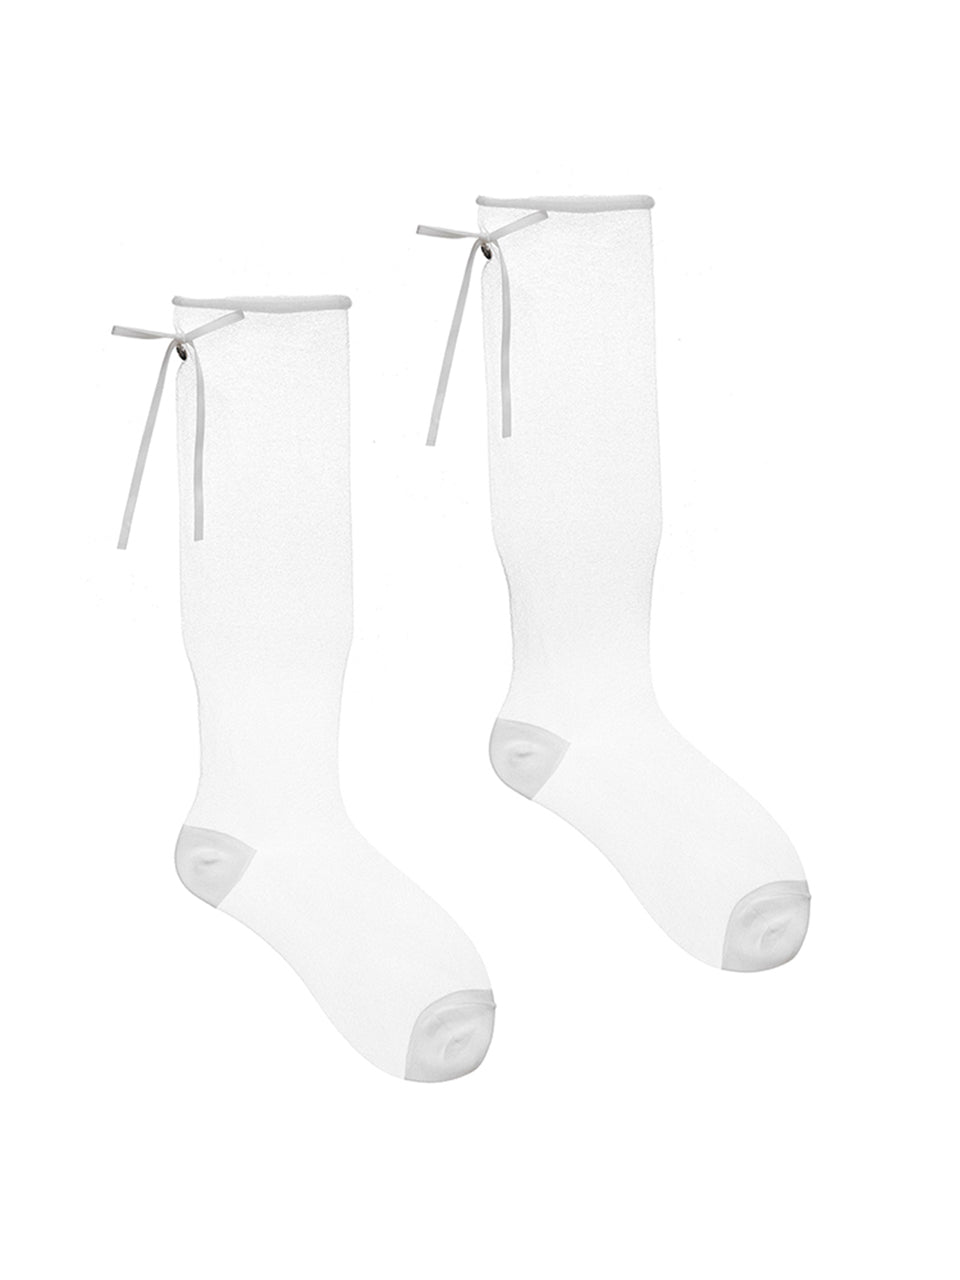 See-through Ribbon Socks in White